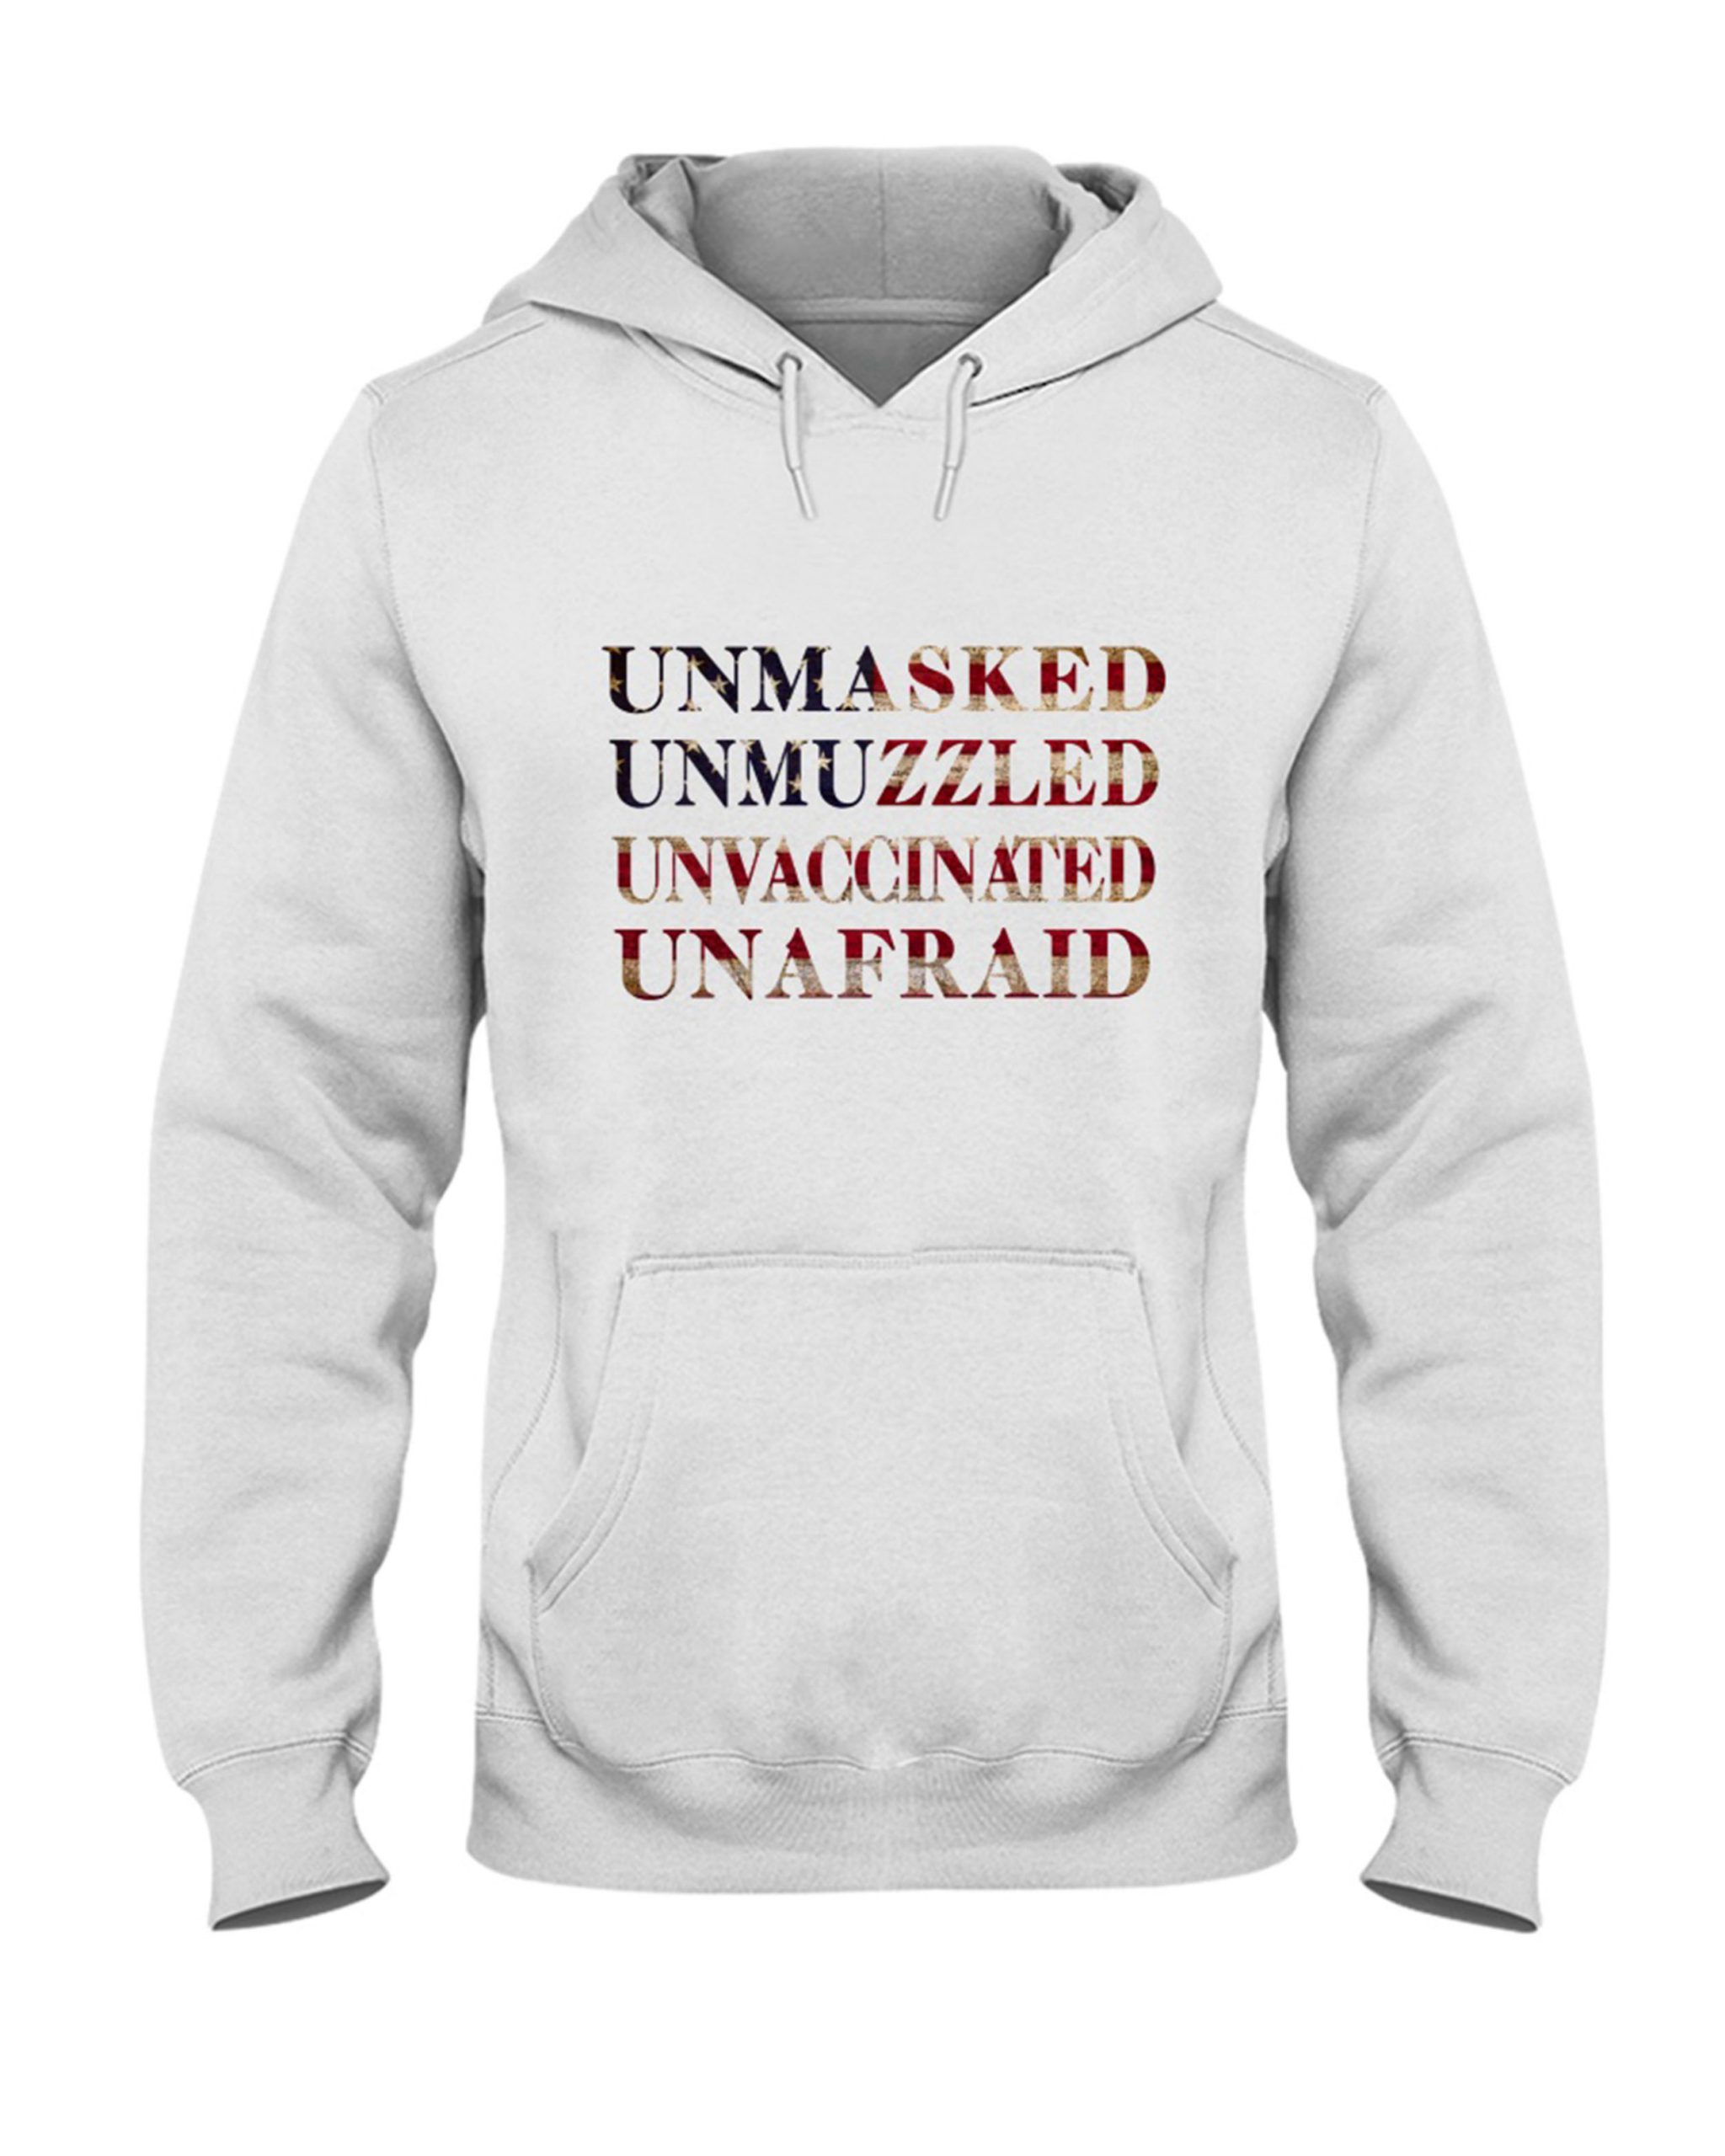 Unmasked Unmuzzled Unvaccinated Unafraid Shirt 1